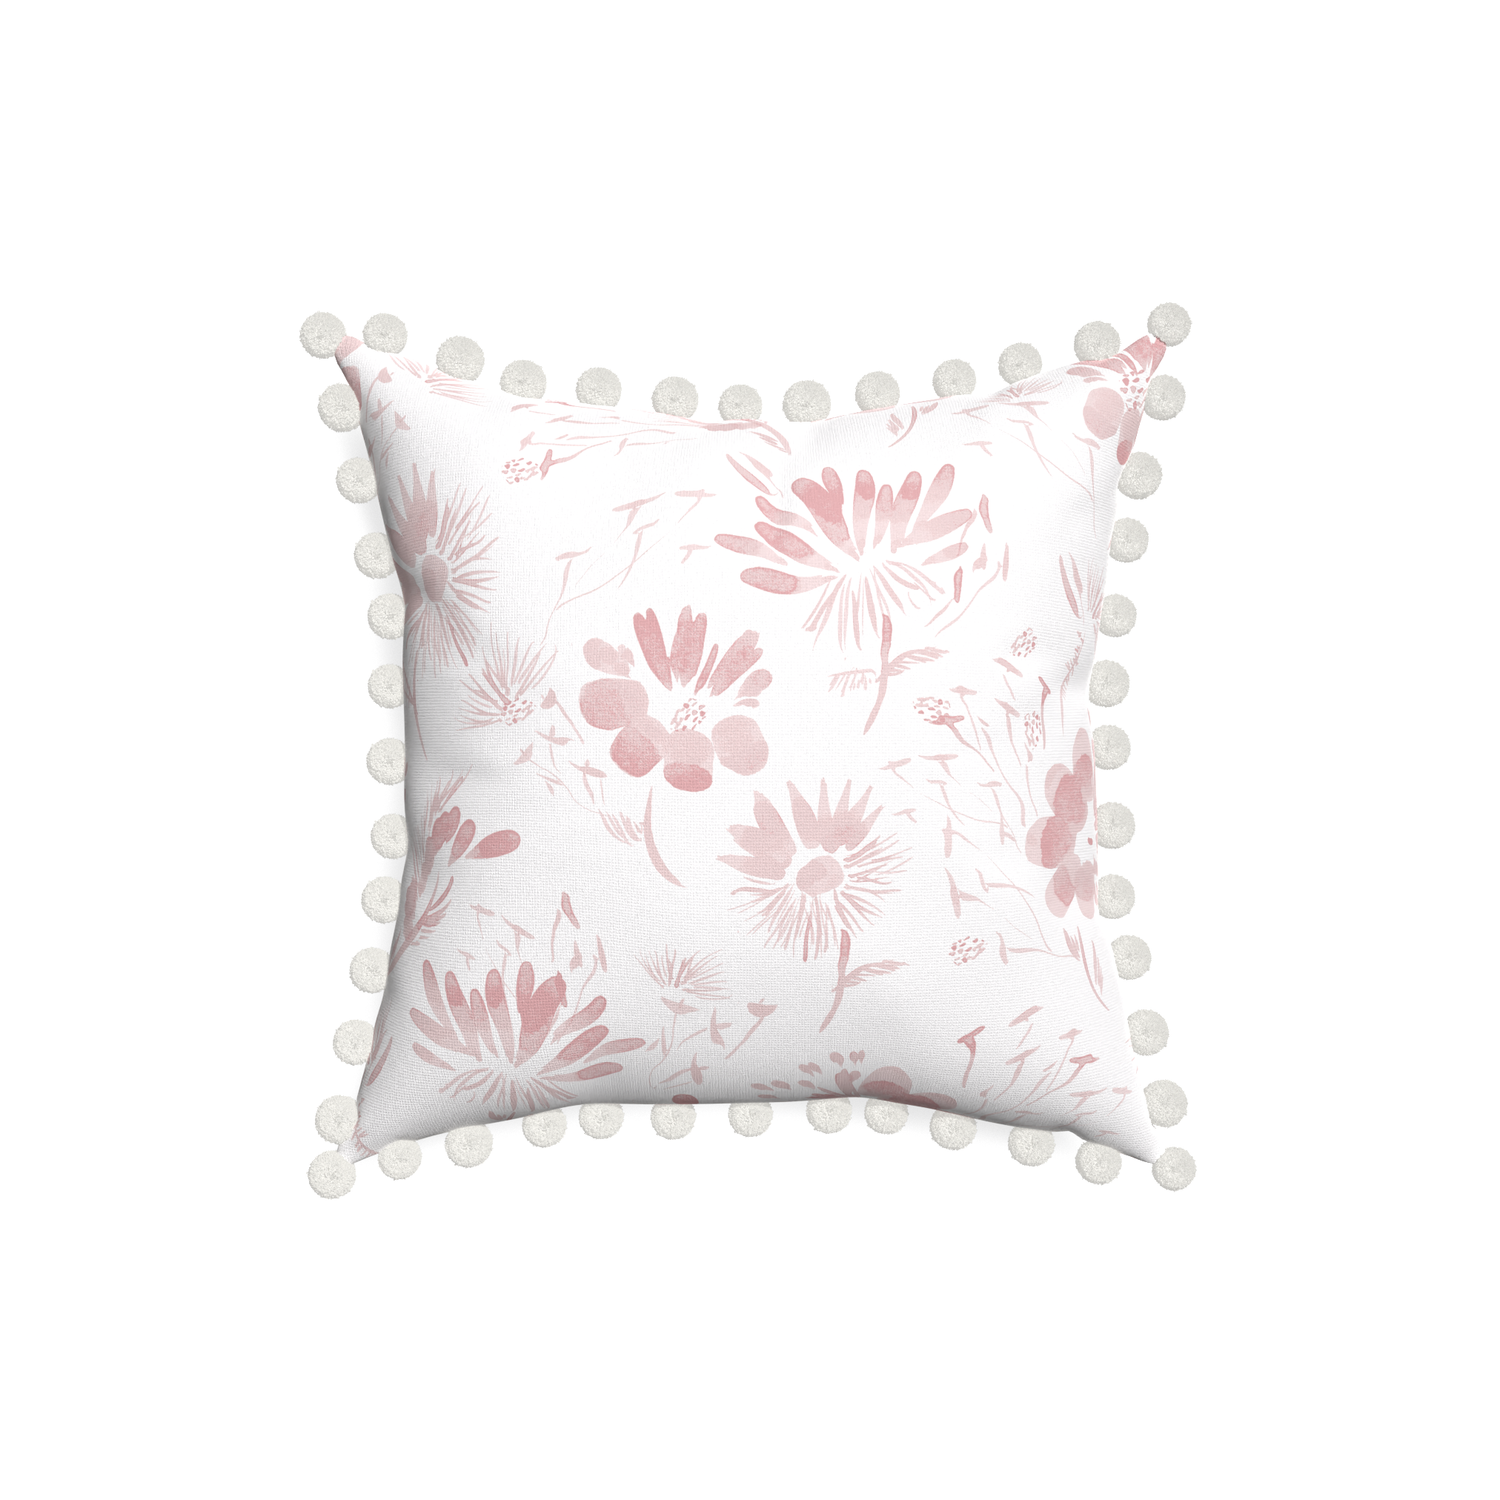 18-square blake custom pillow with snow pom pom on white background